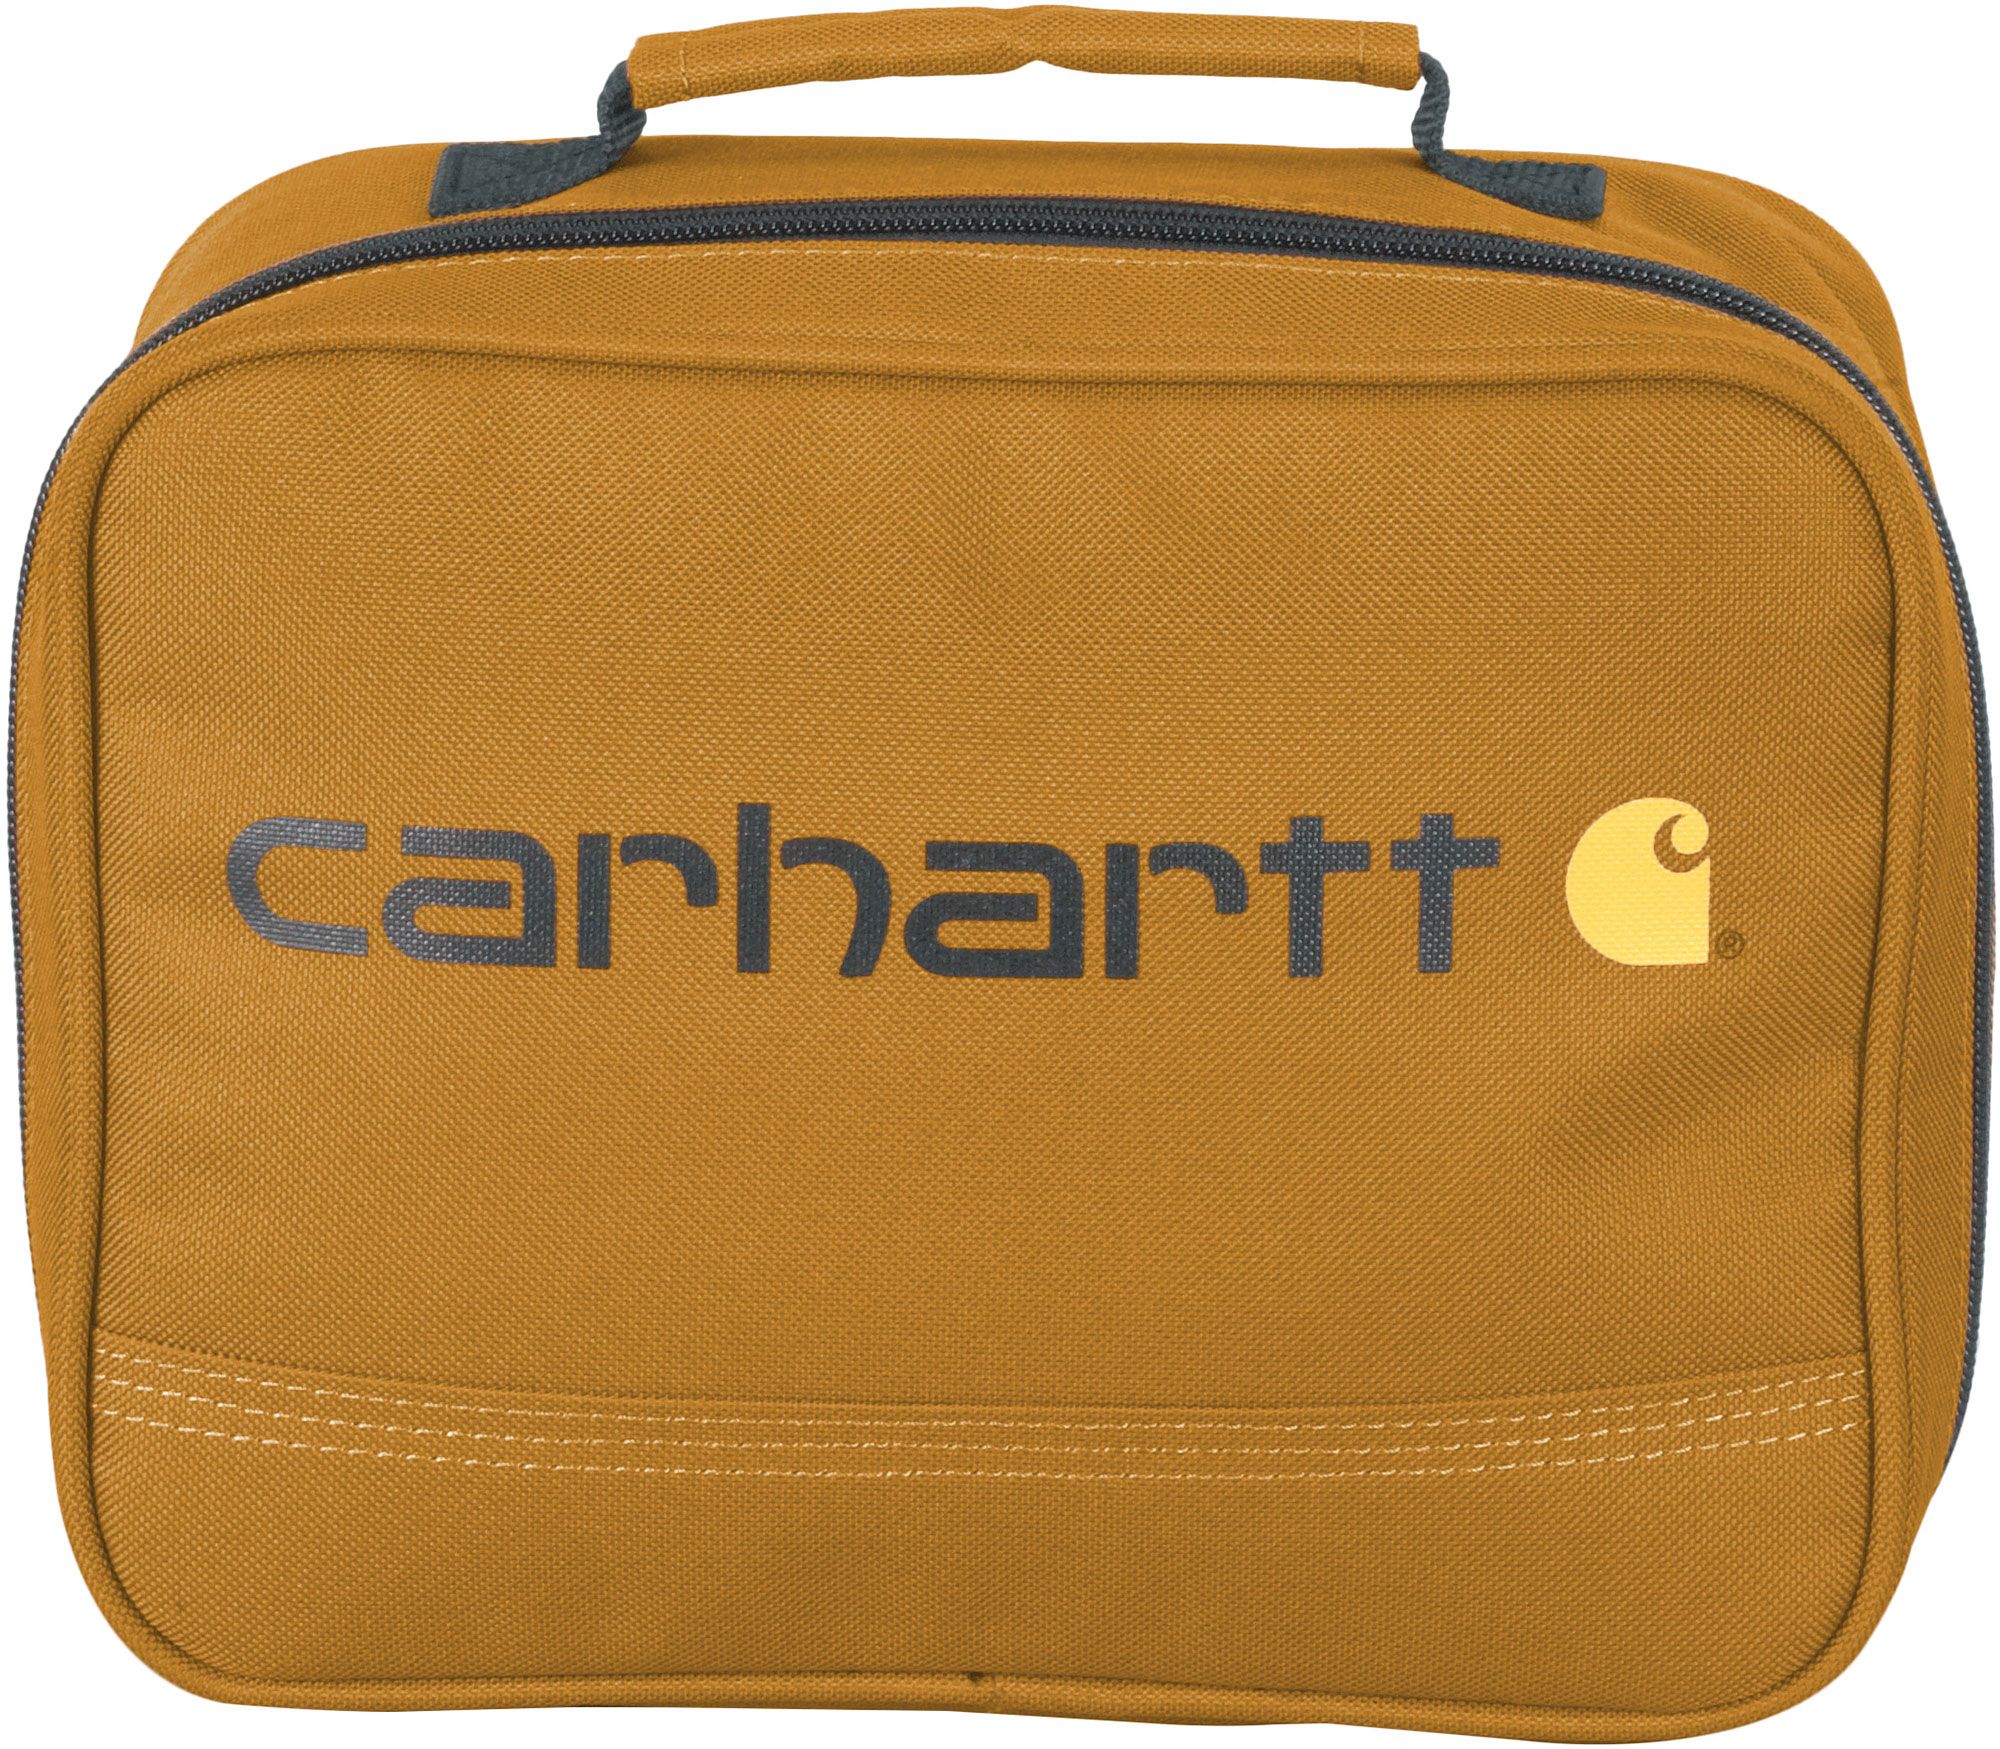 Carhartt Lunch Box | DICK'S Sporting Goods